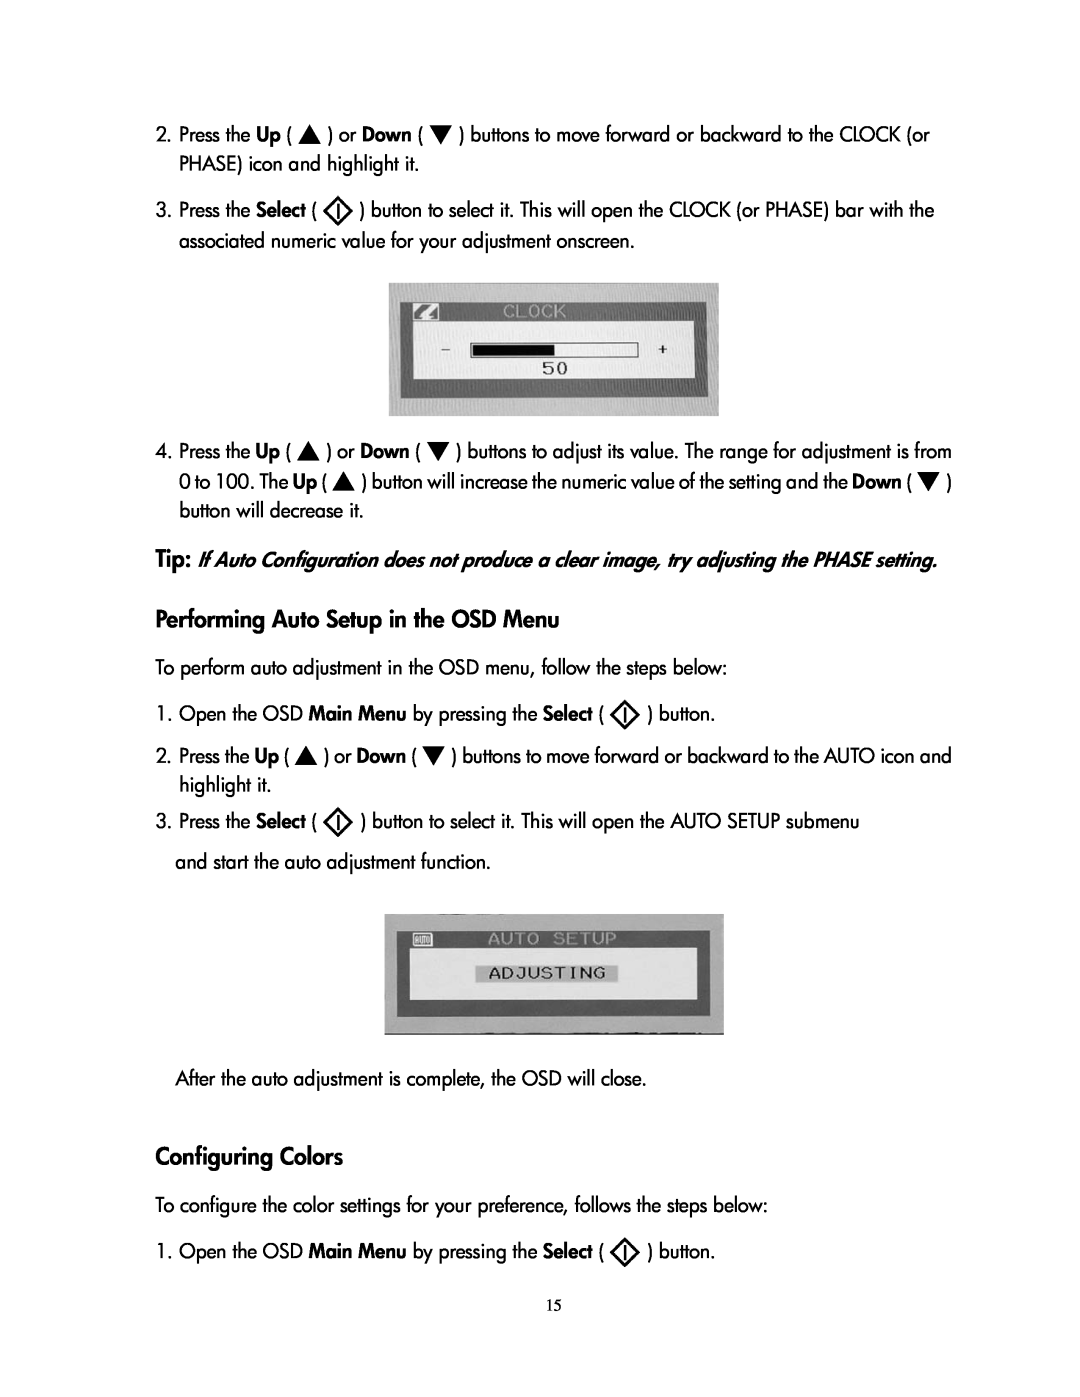 Compaq 1501 manual Performing Auto Setup in the OSD Menu, Configuring Colors 